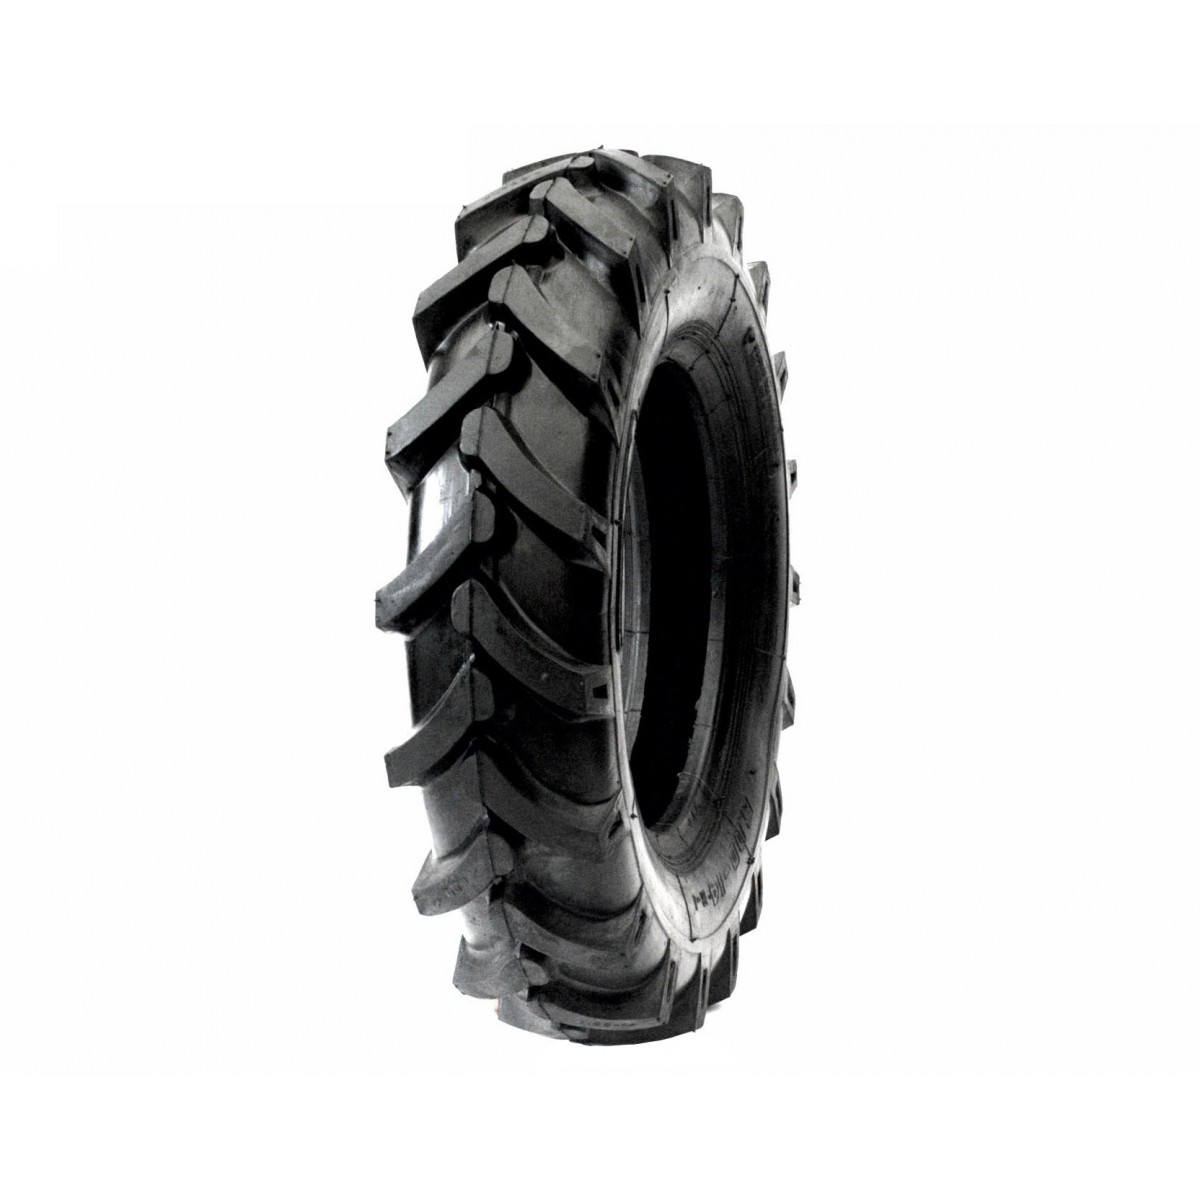 Agricultural tire 6.00-14 6PR 6-14 6x14